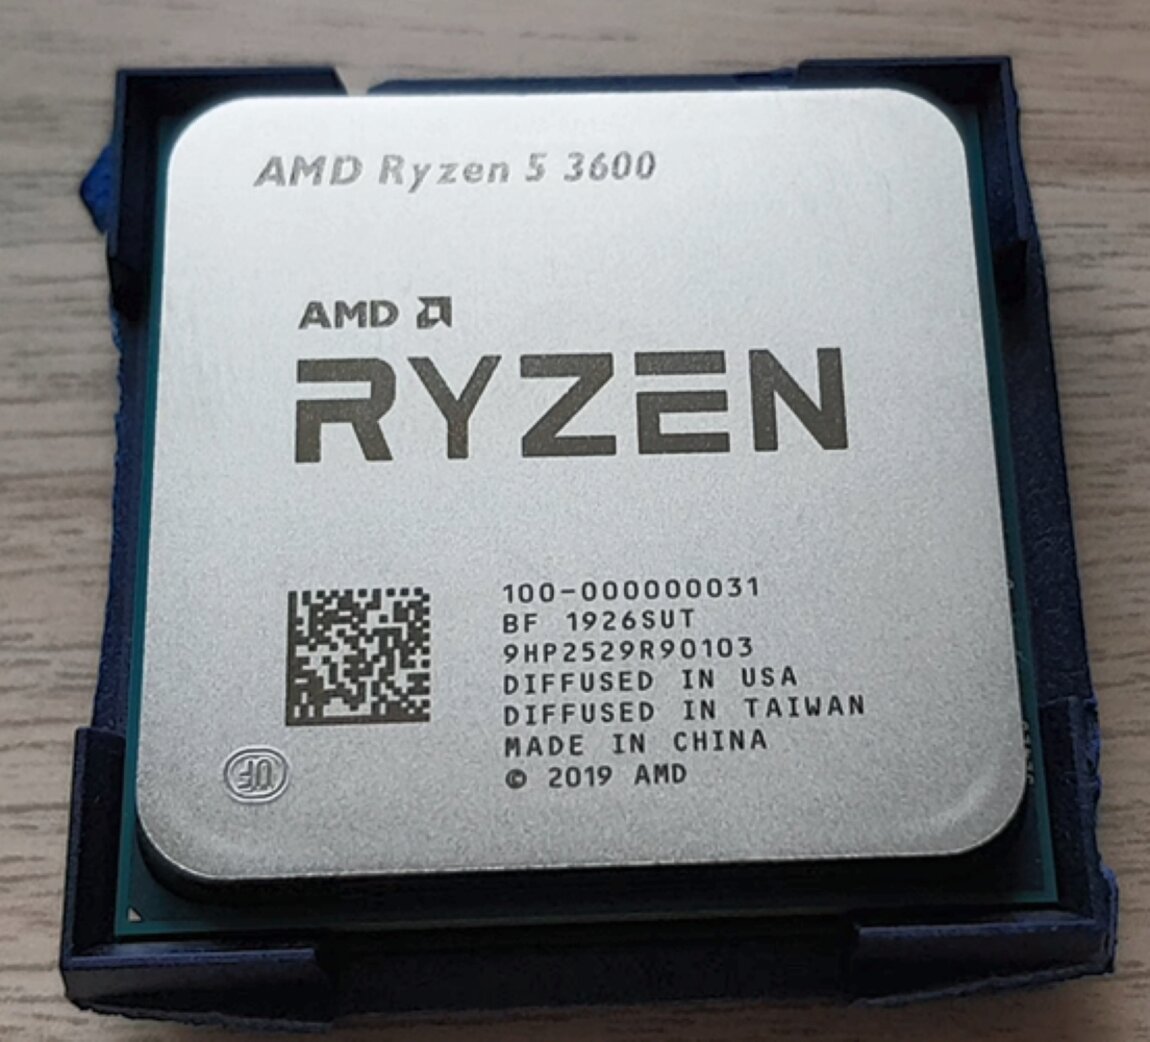 Ryzen 5 3600g. AMD Ryzen 5 3600. AMD Ryzen 5 3600 OEM. Процессор AMD Ryzen 5 3600 am4. Процессор AMD Ryzen 5 3600x OEM am4 Matisse.